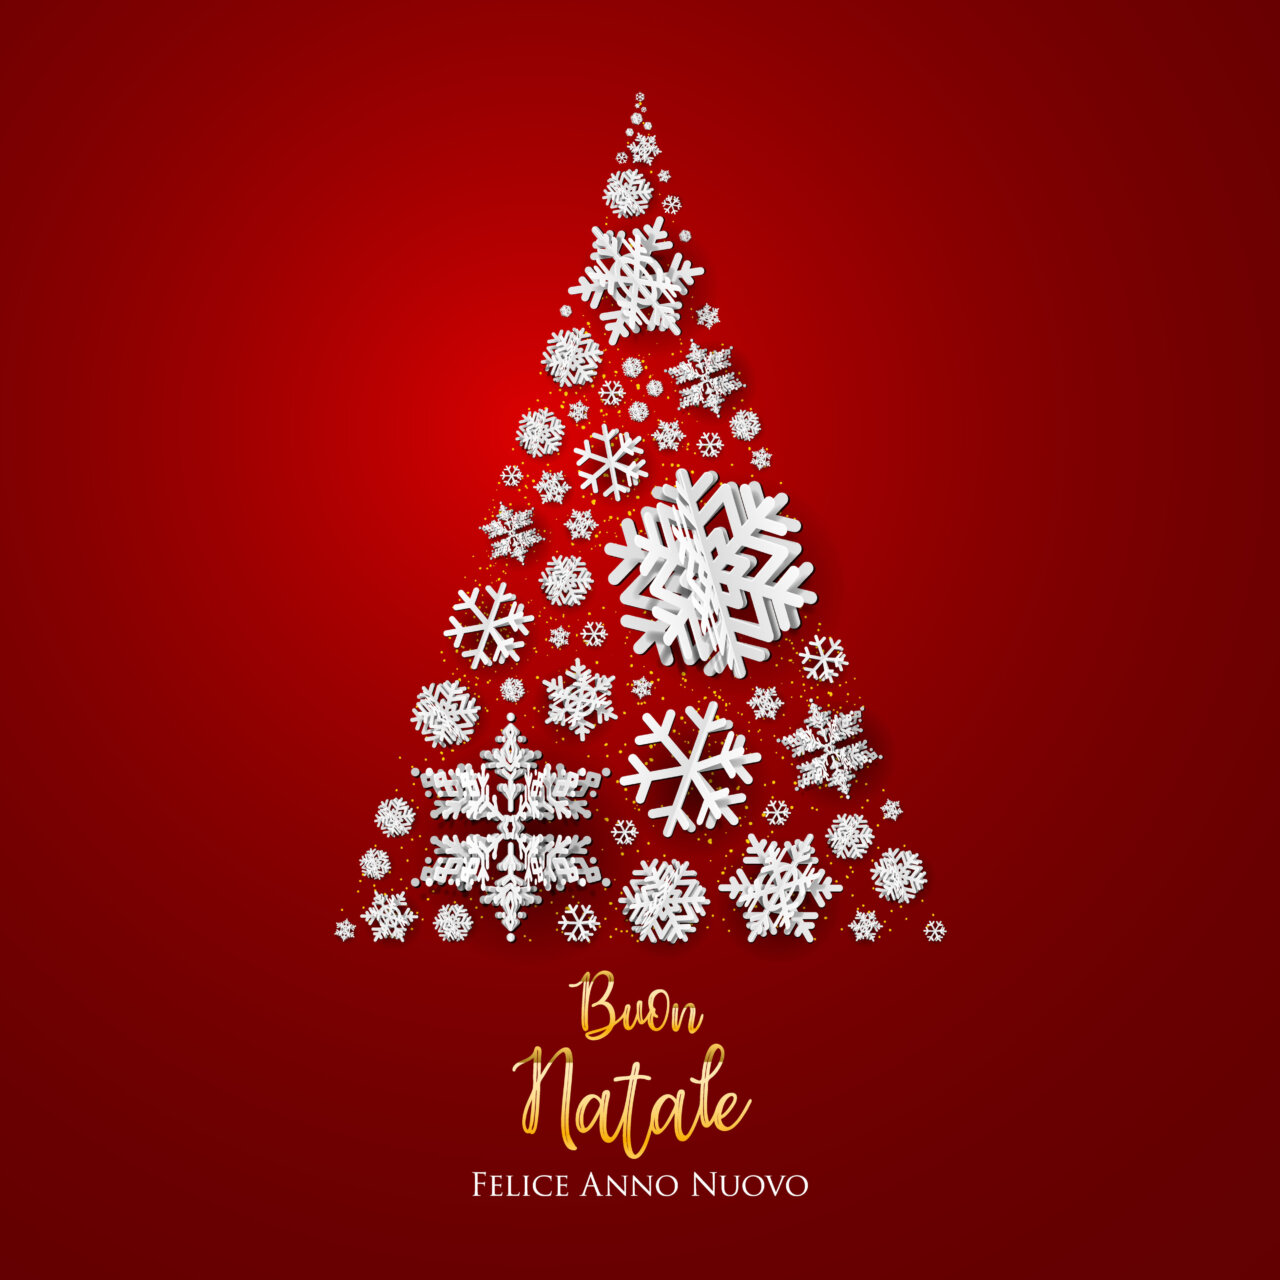 Italian Christmas (Buon Natale) and Happy New Year 2020 greeting